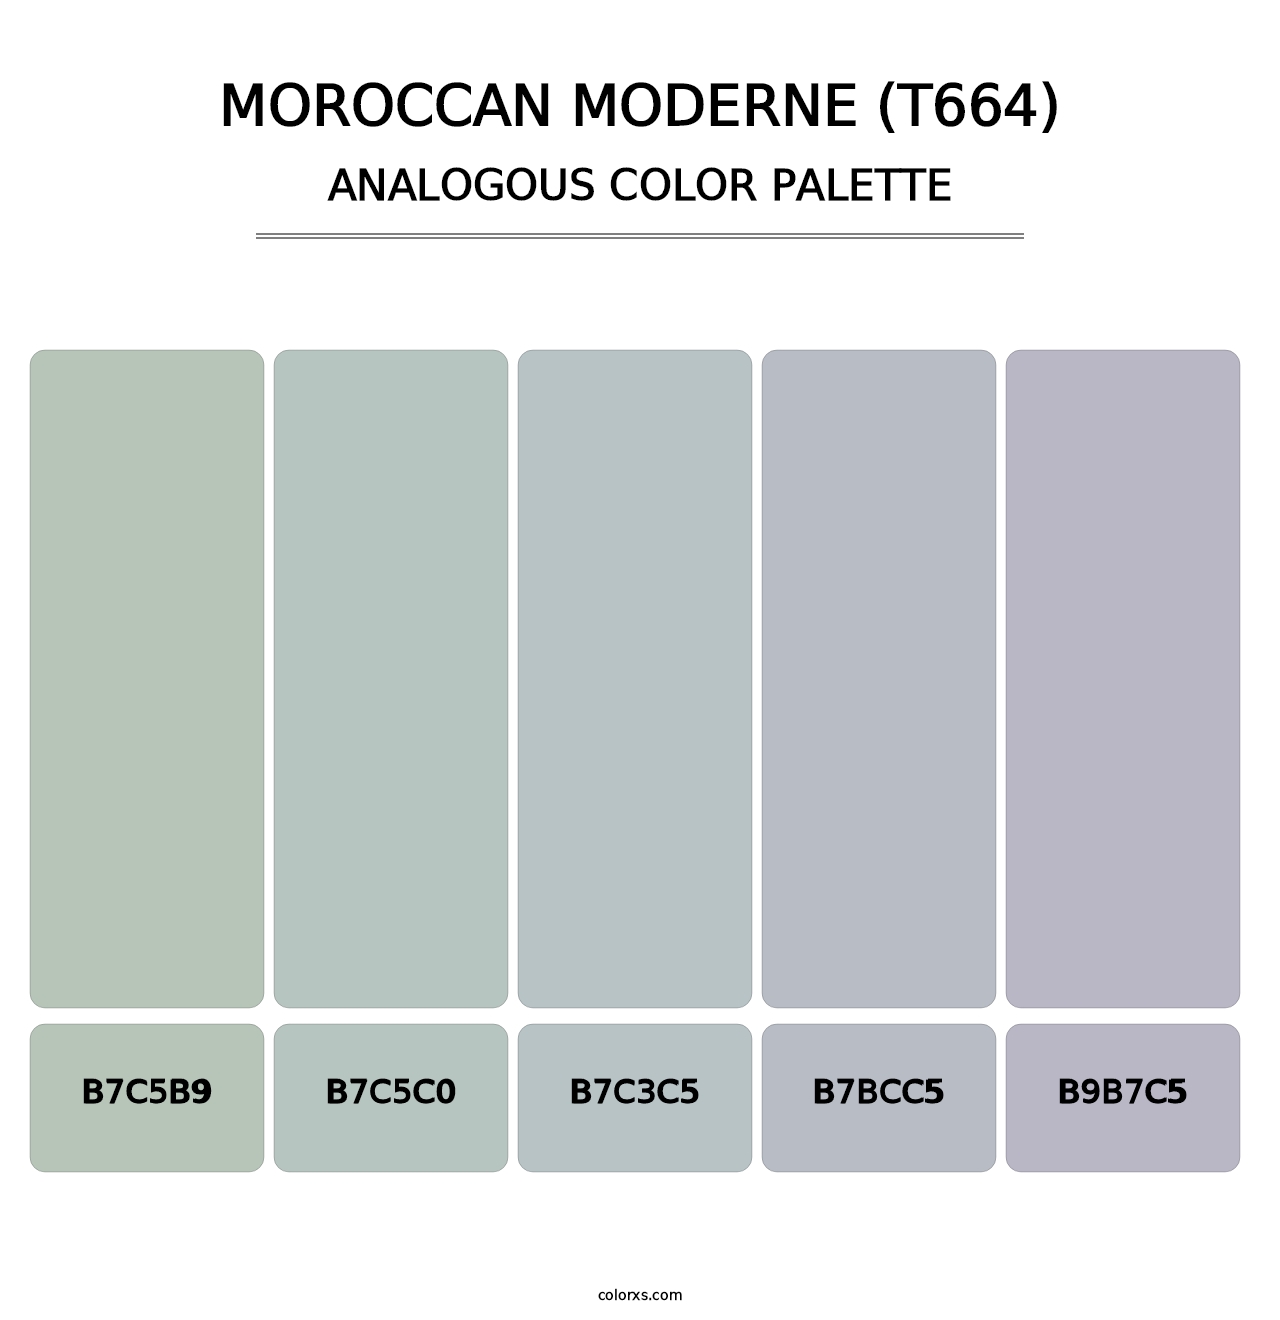 Moroccan Moderne (T664) - Analogous Color Palette